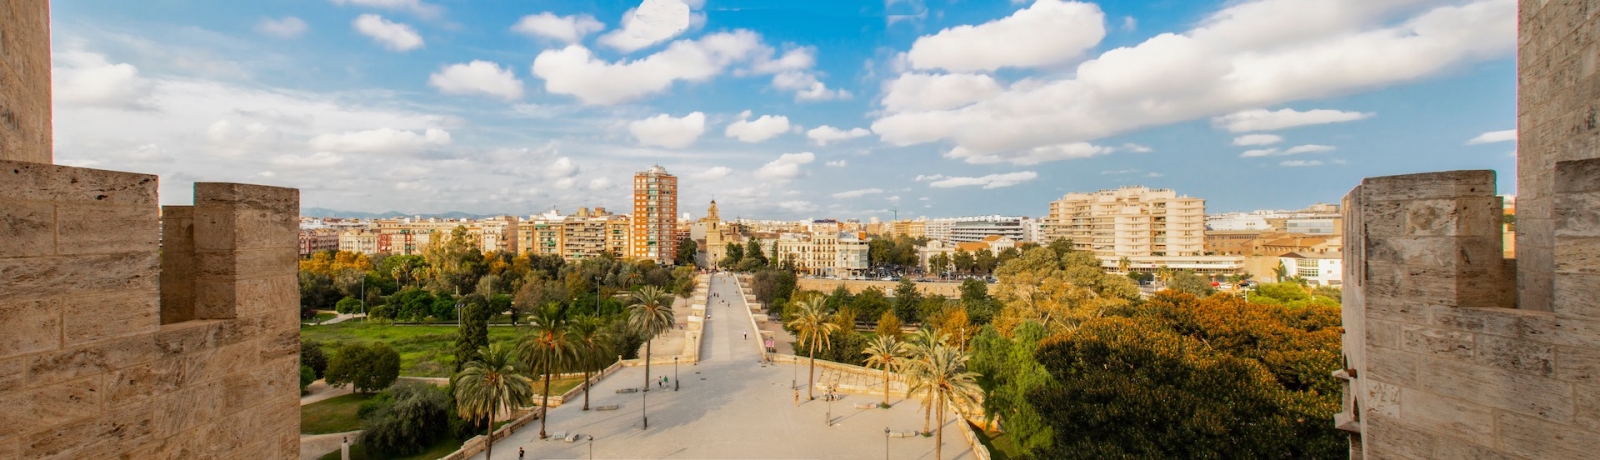 Vista panoramica di Valencia dalle Torri Serranos